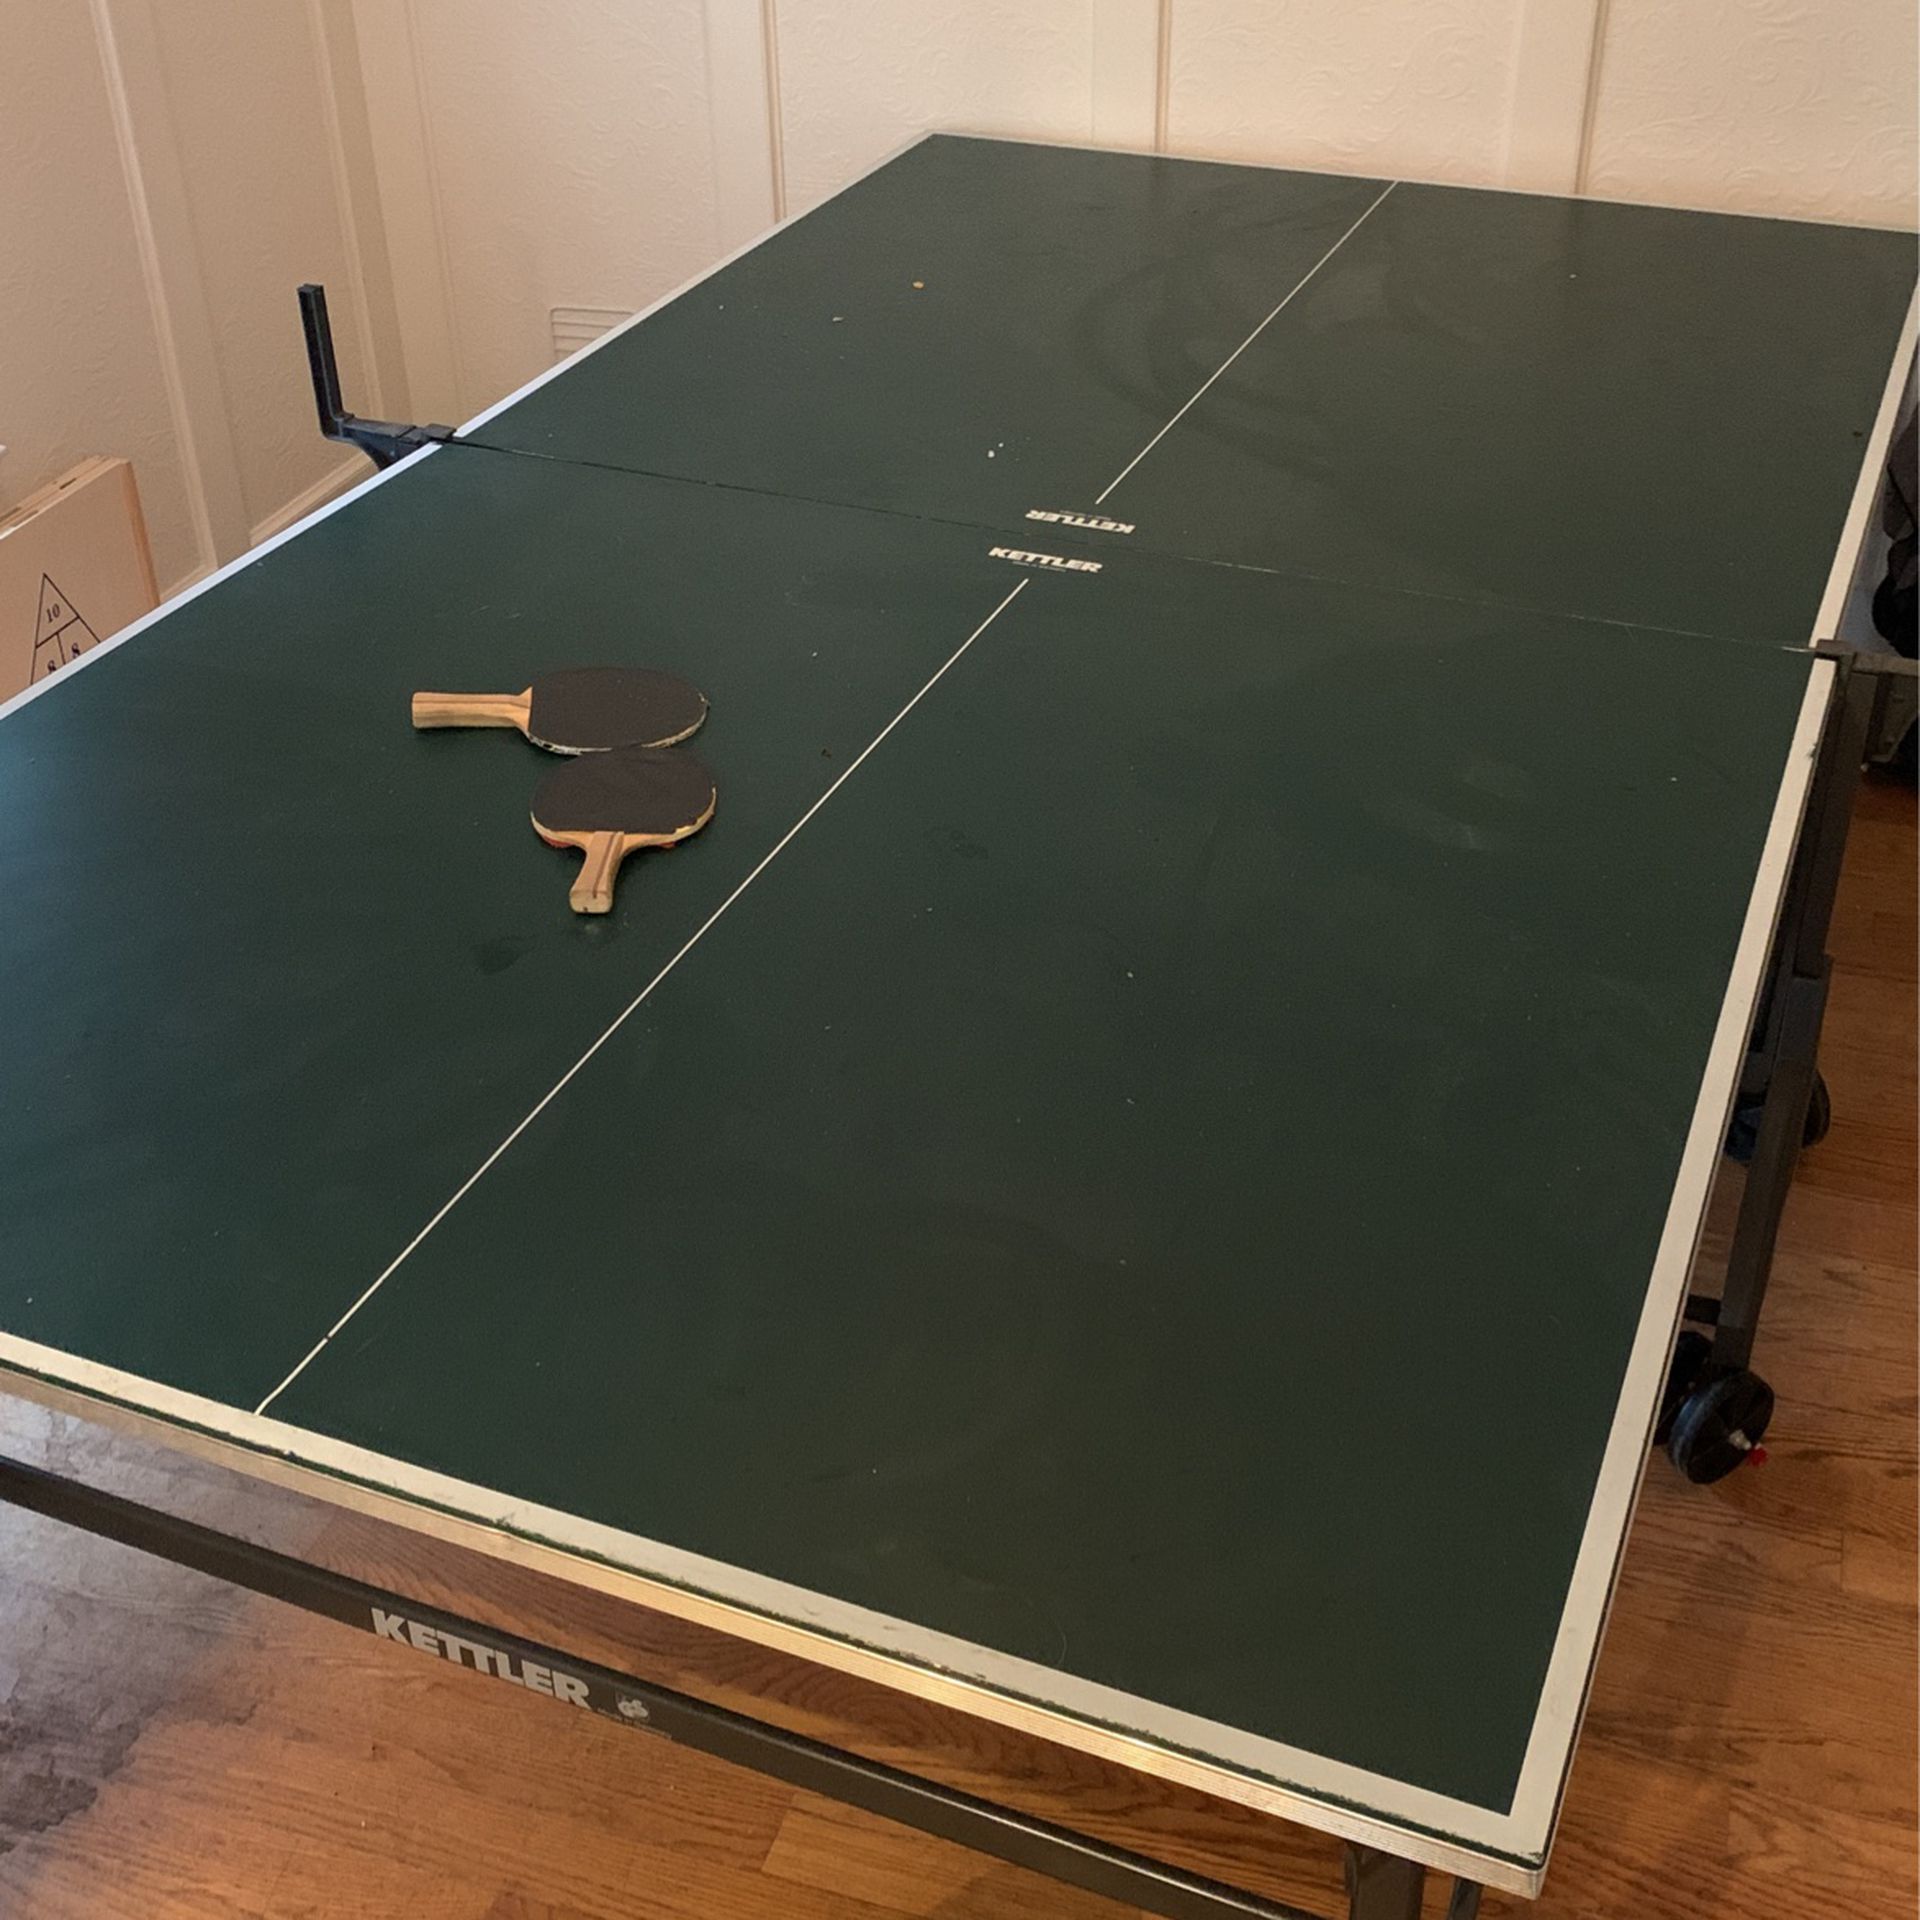 Kettler Ping pong Table 